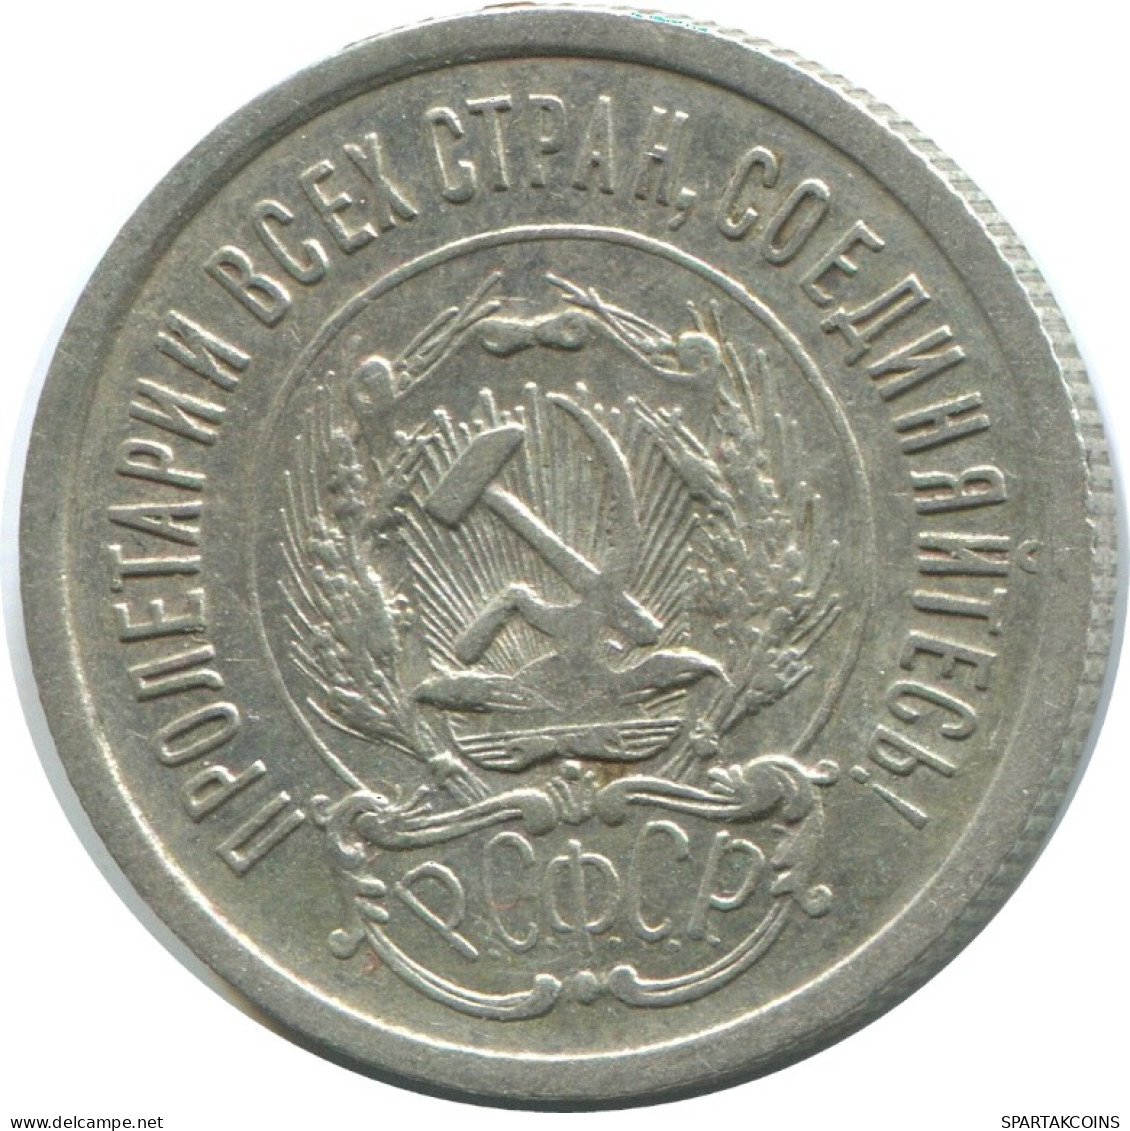 20 KOPEKS 1923 RUSSIA RSFSR SILVER Coin HIGH GRADE #AF530.4.U.A - Russia